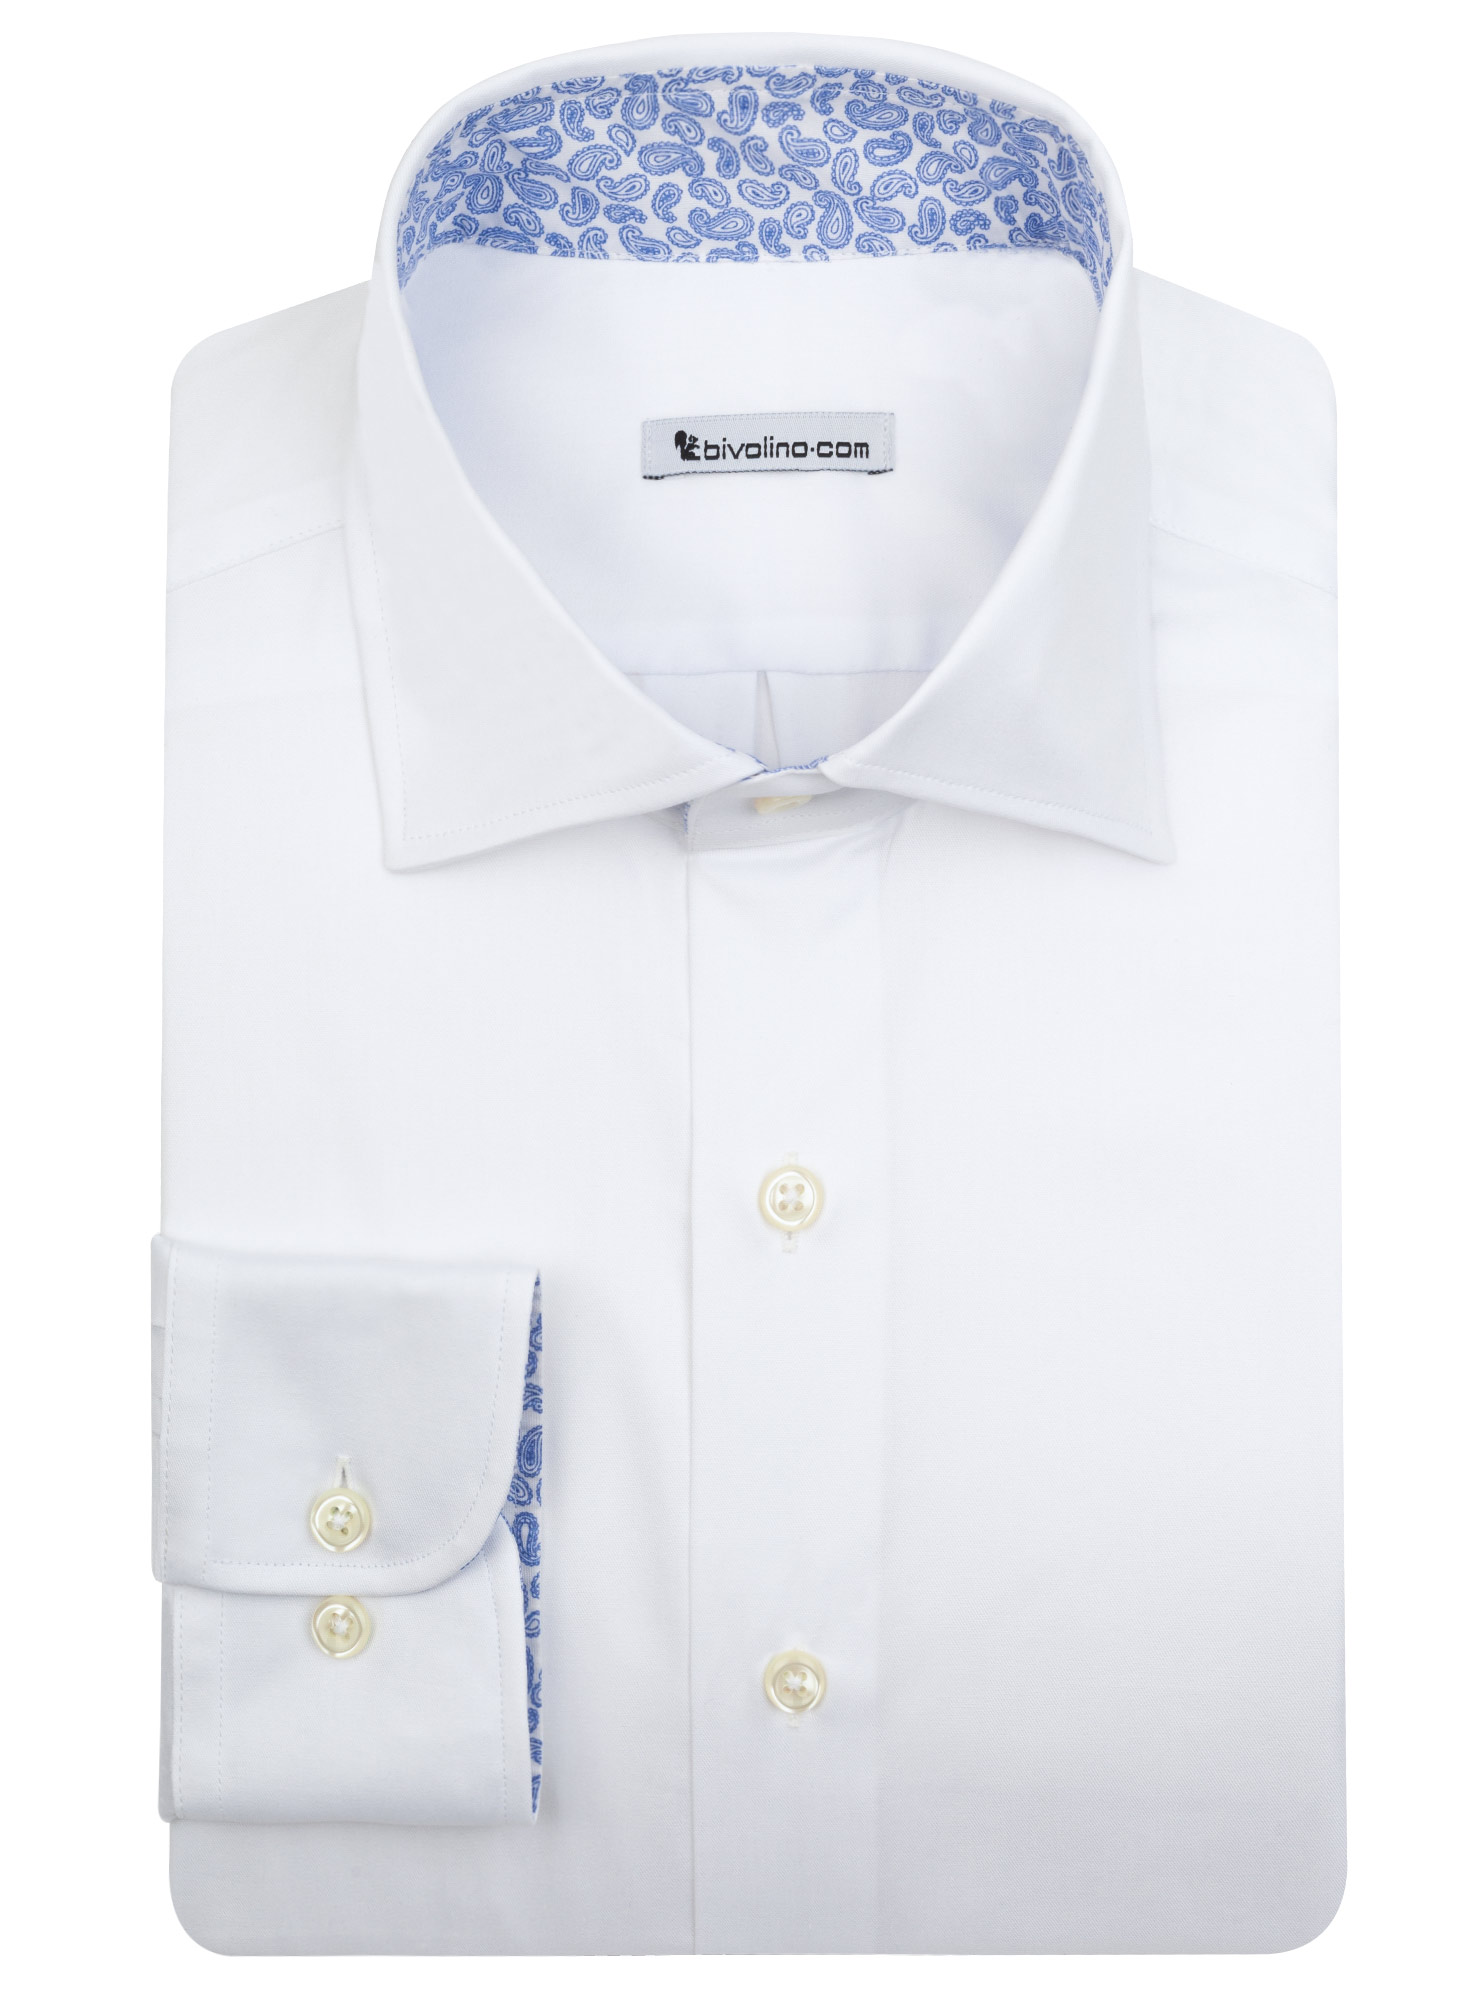 STRONGOLII - White Twill non-iron shirt - Opal 1